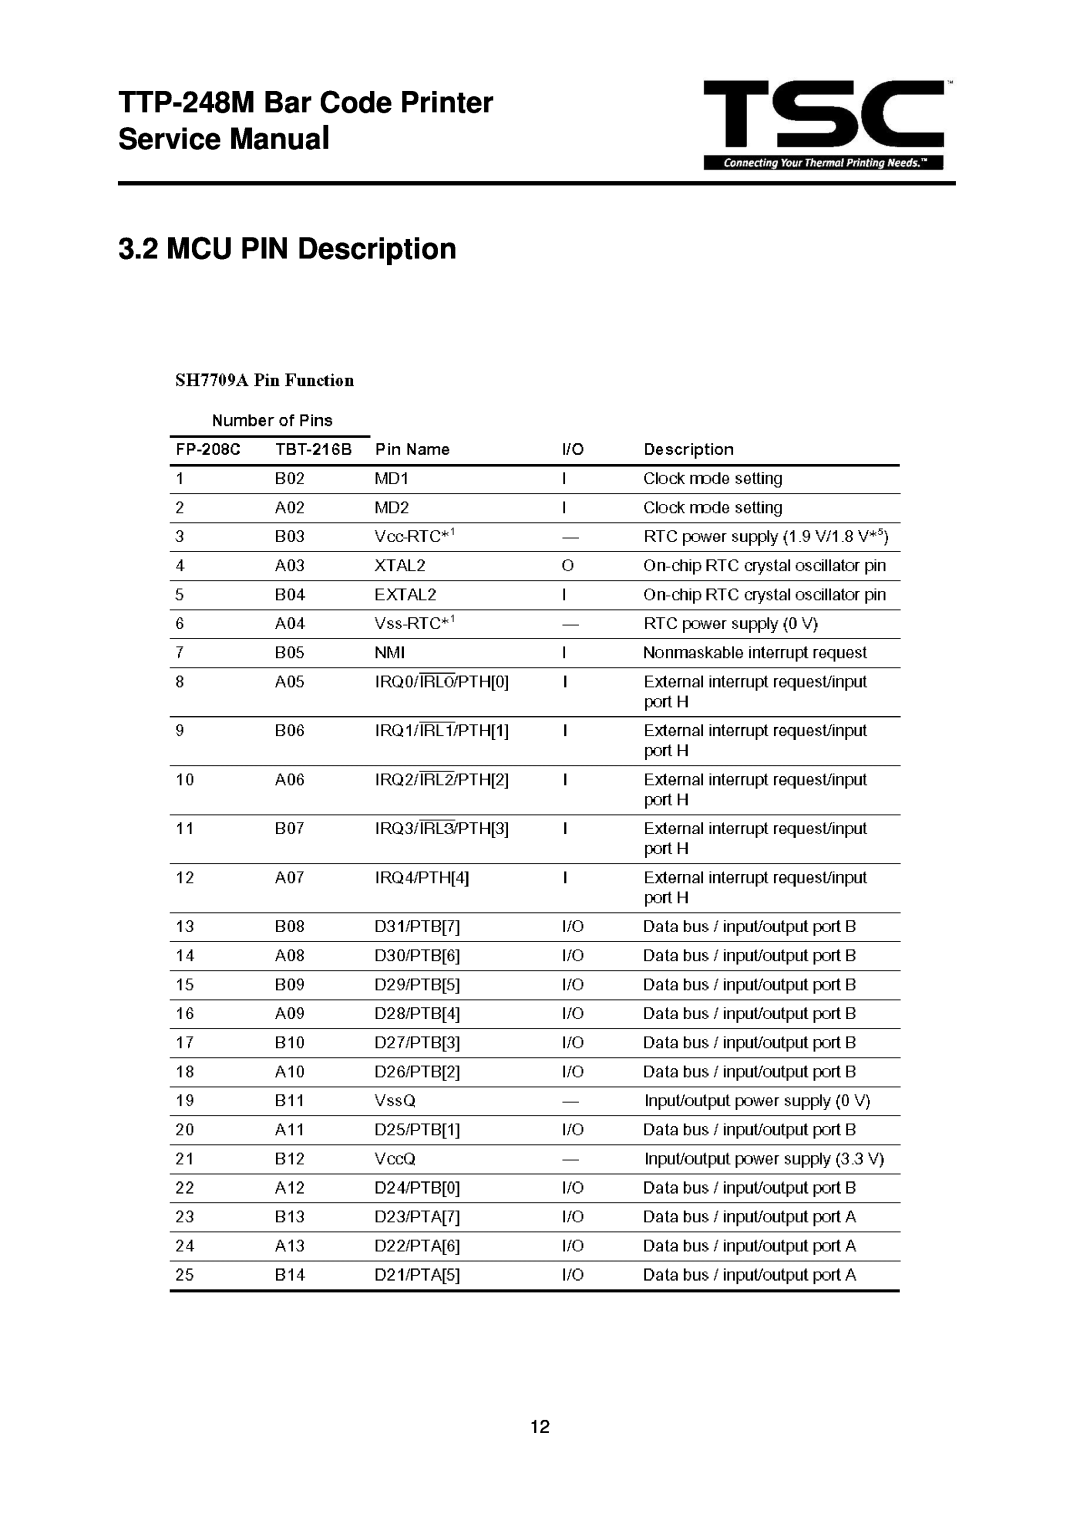 The Speaker Company TTP 248M service manual TTP-248M Bar Code Printer Service Manual 3.2 MCU PIN Description 